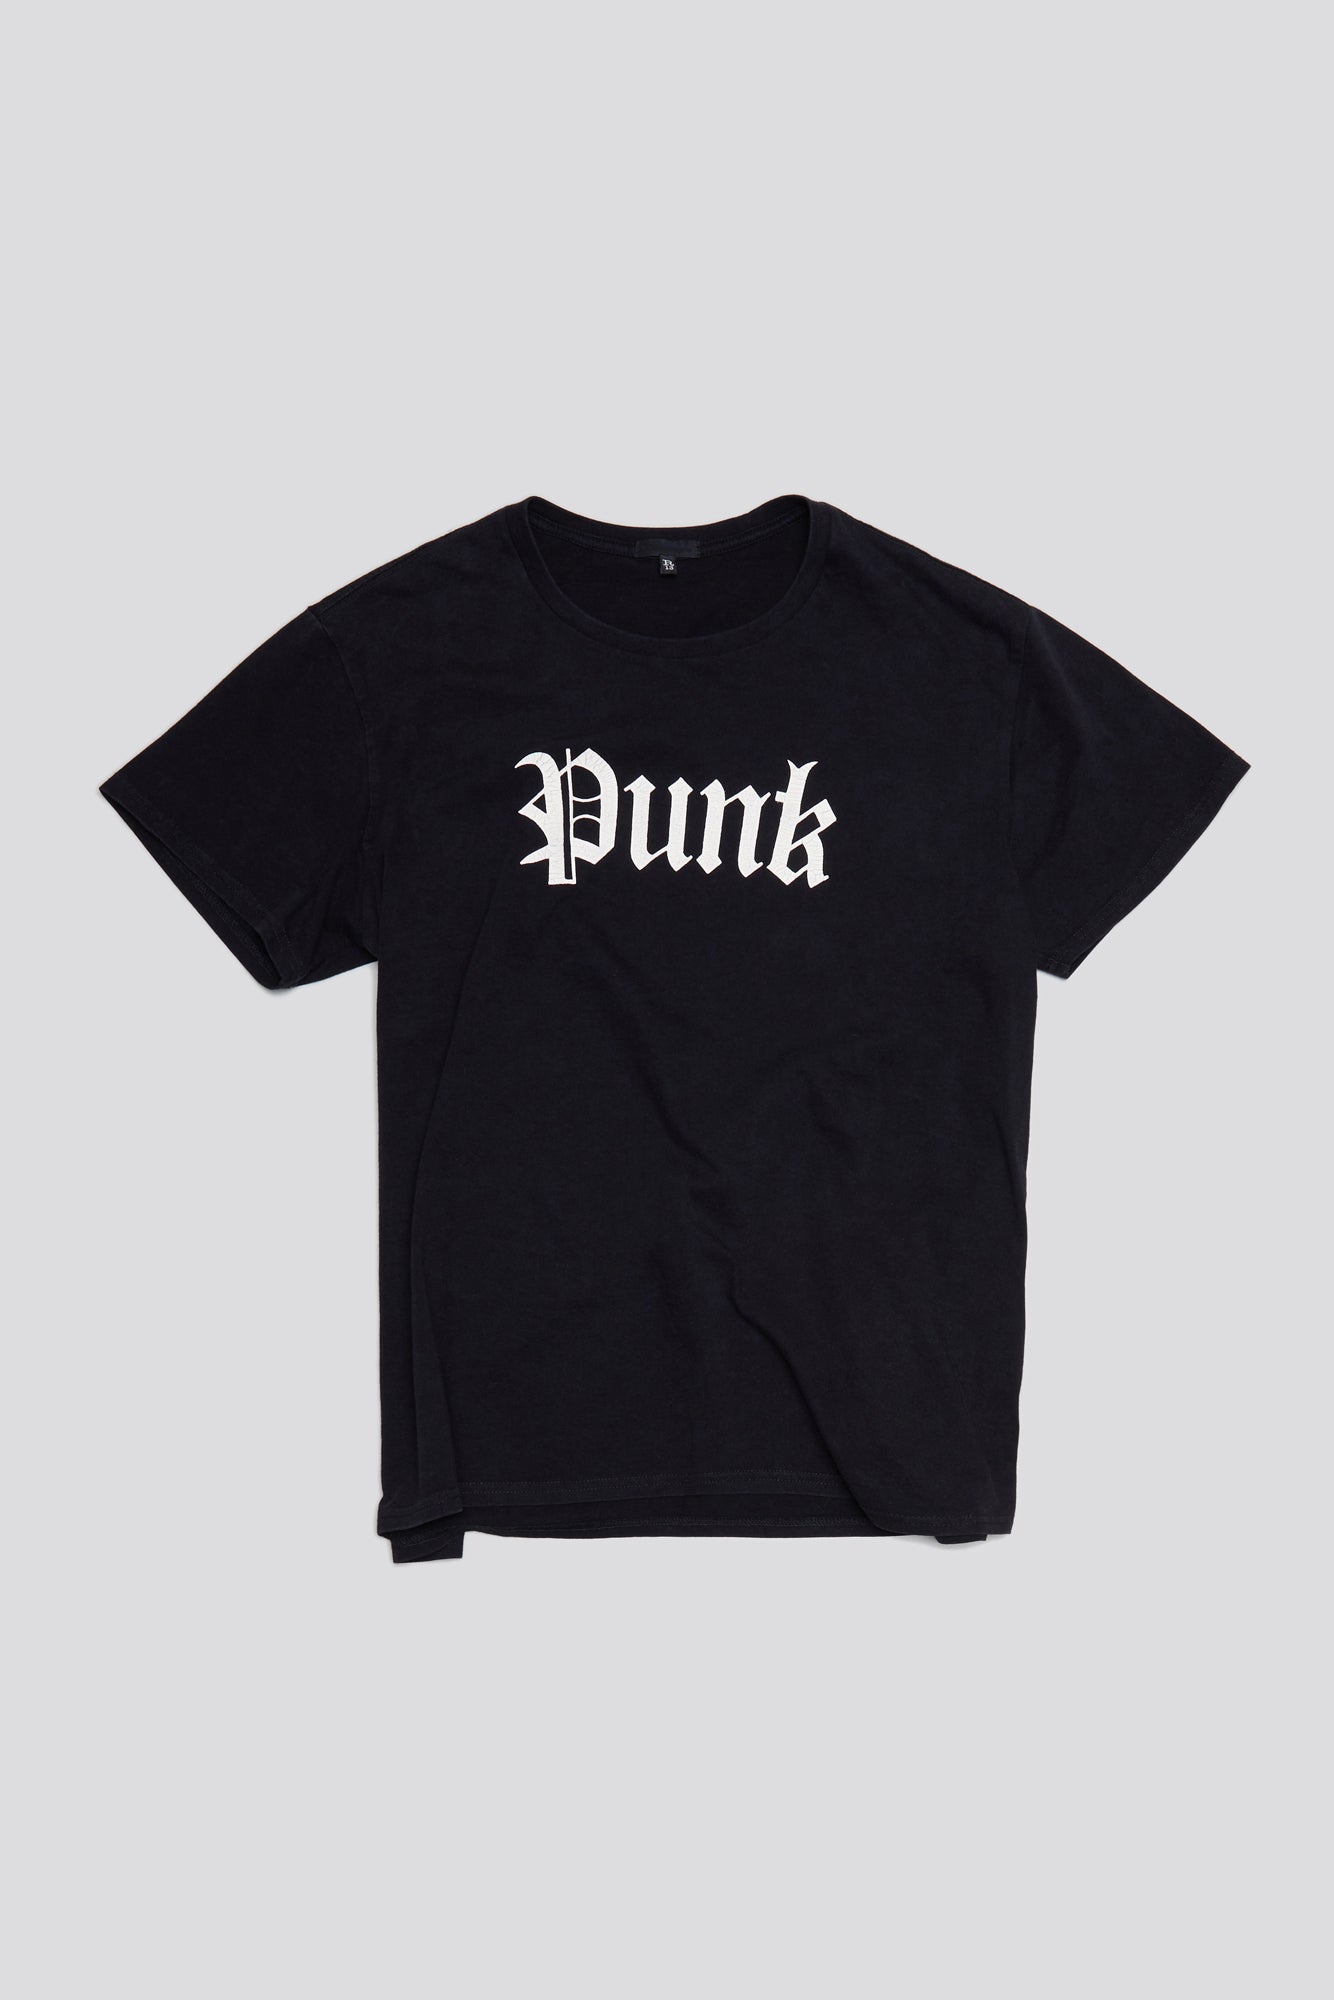 PUNK BOY T - BLACK